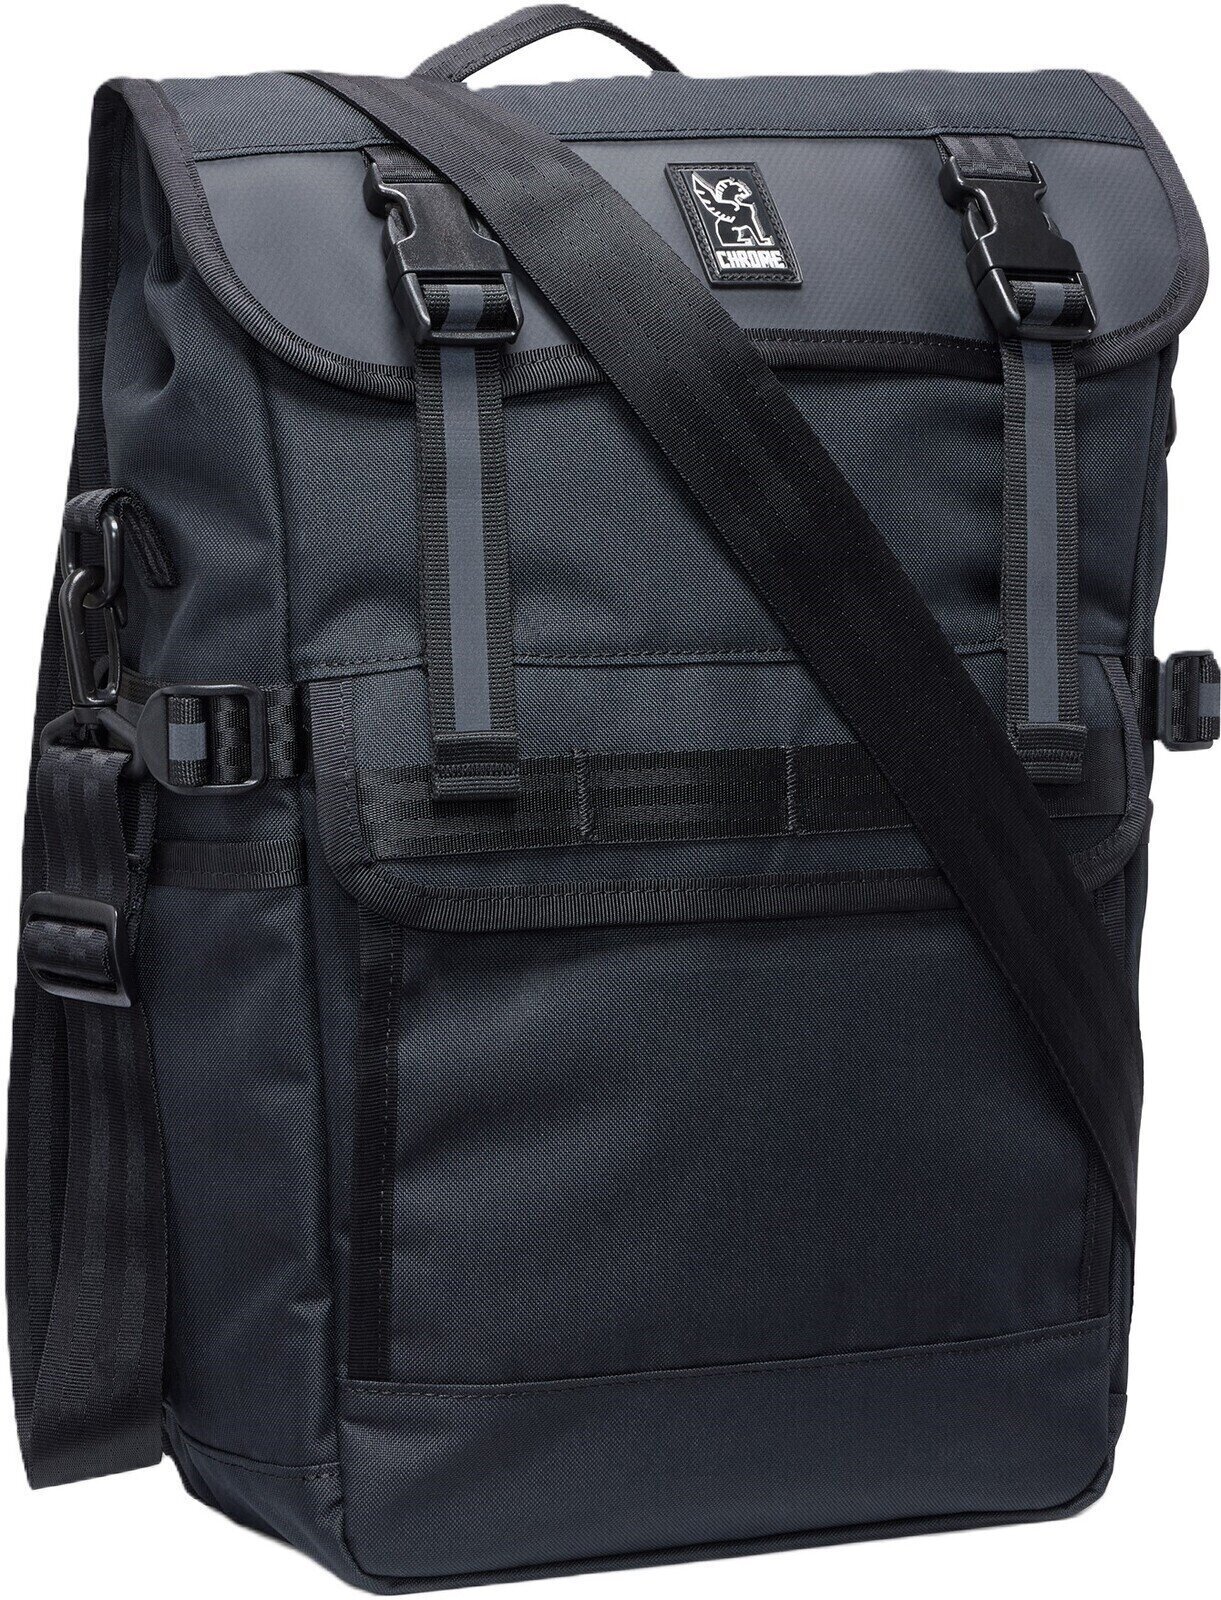 Bicycle bag Chrome Holman Pannier Bag Black 15 - 20 L